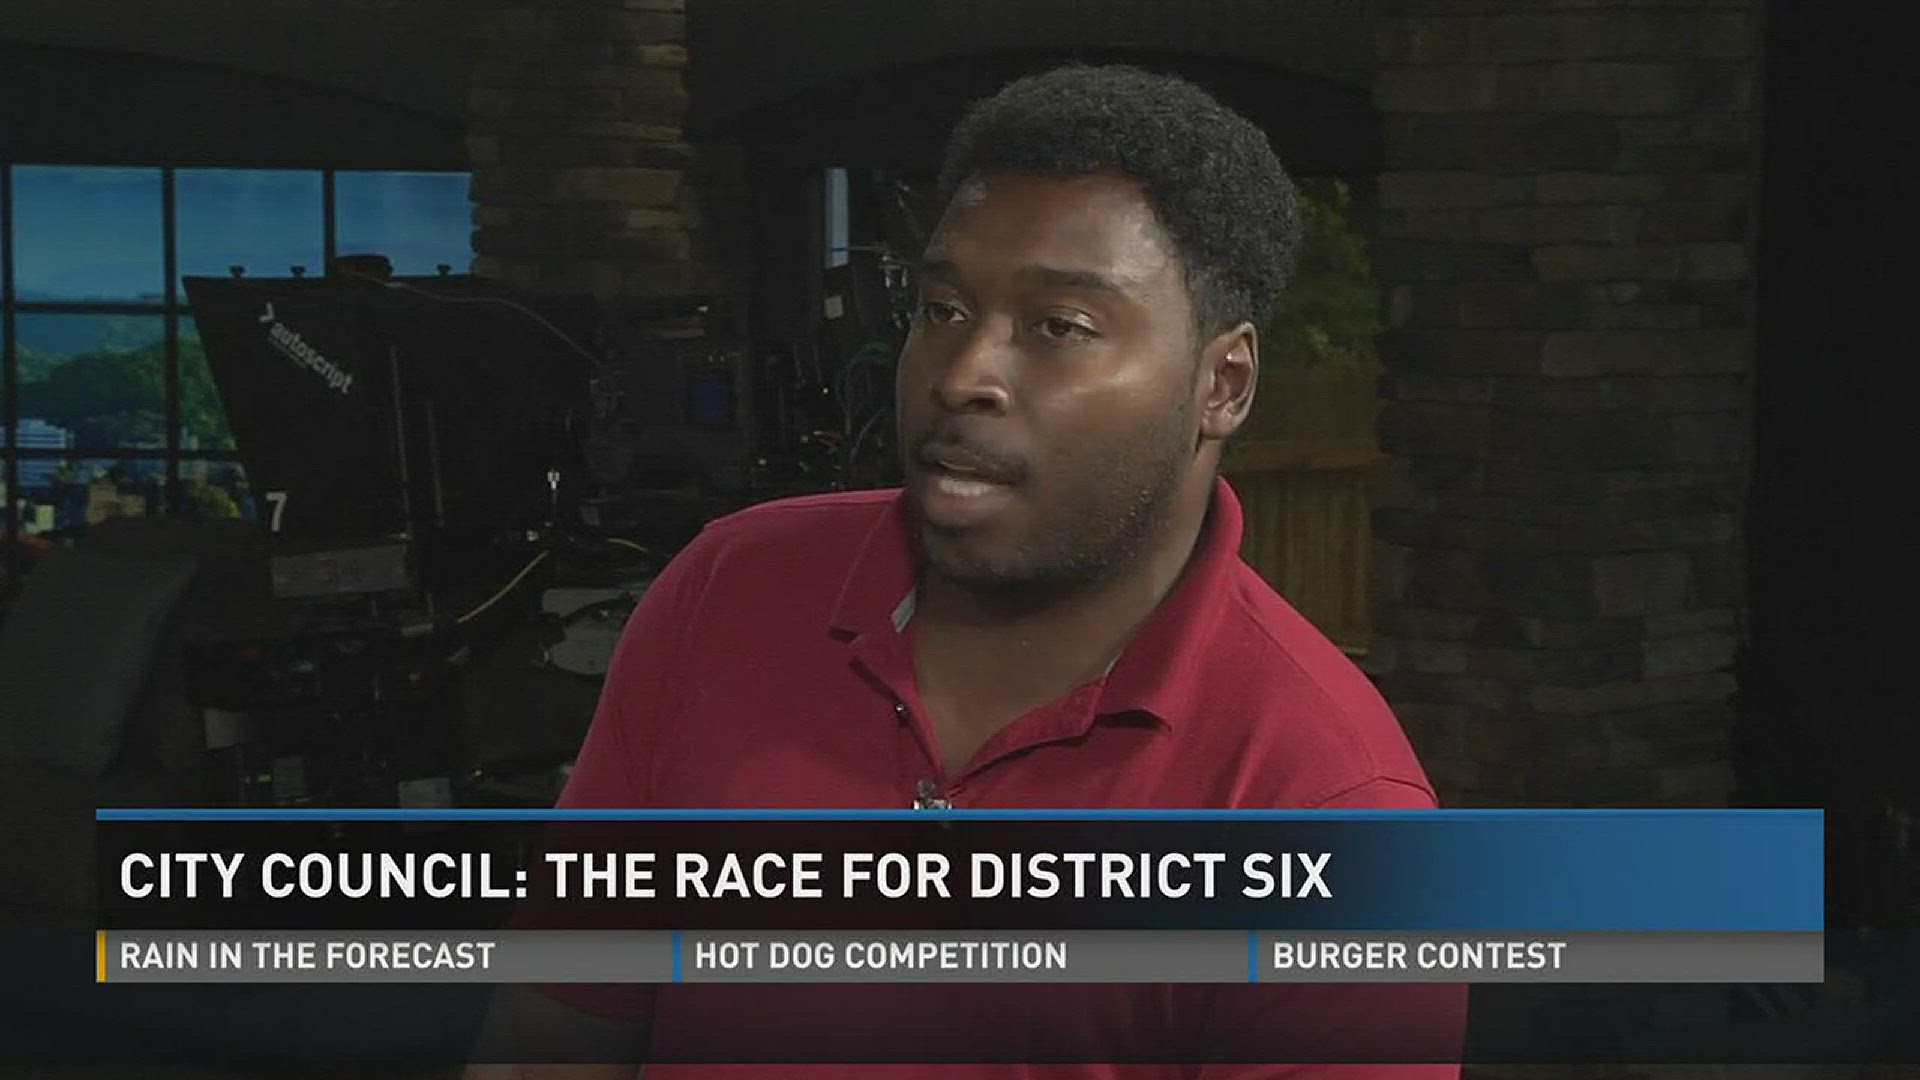 Knoxville city council race: district 6 candidate David Gillette